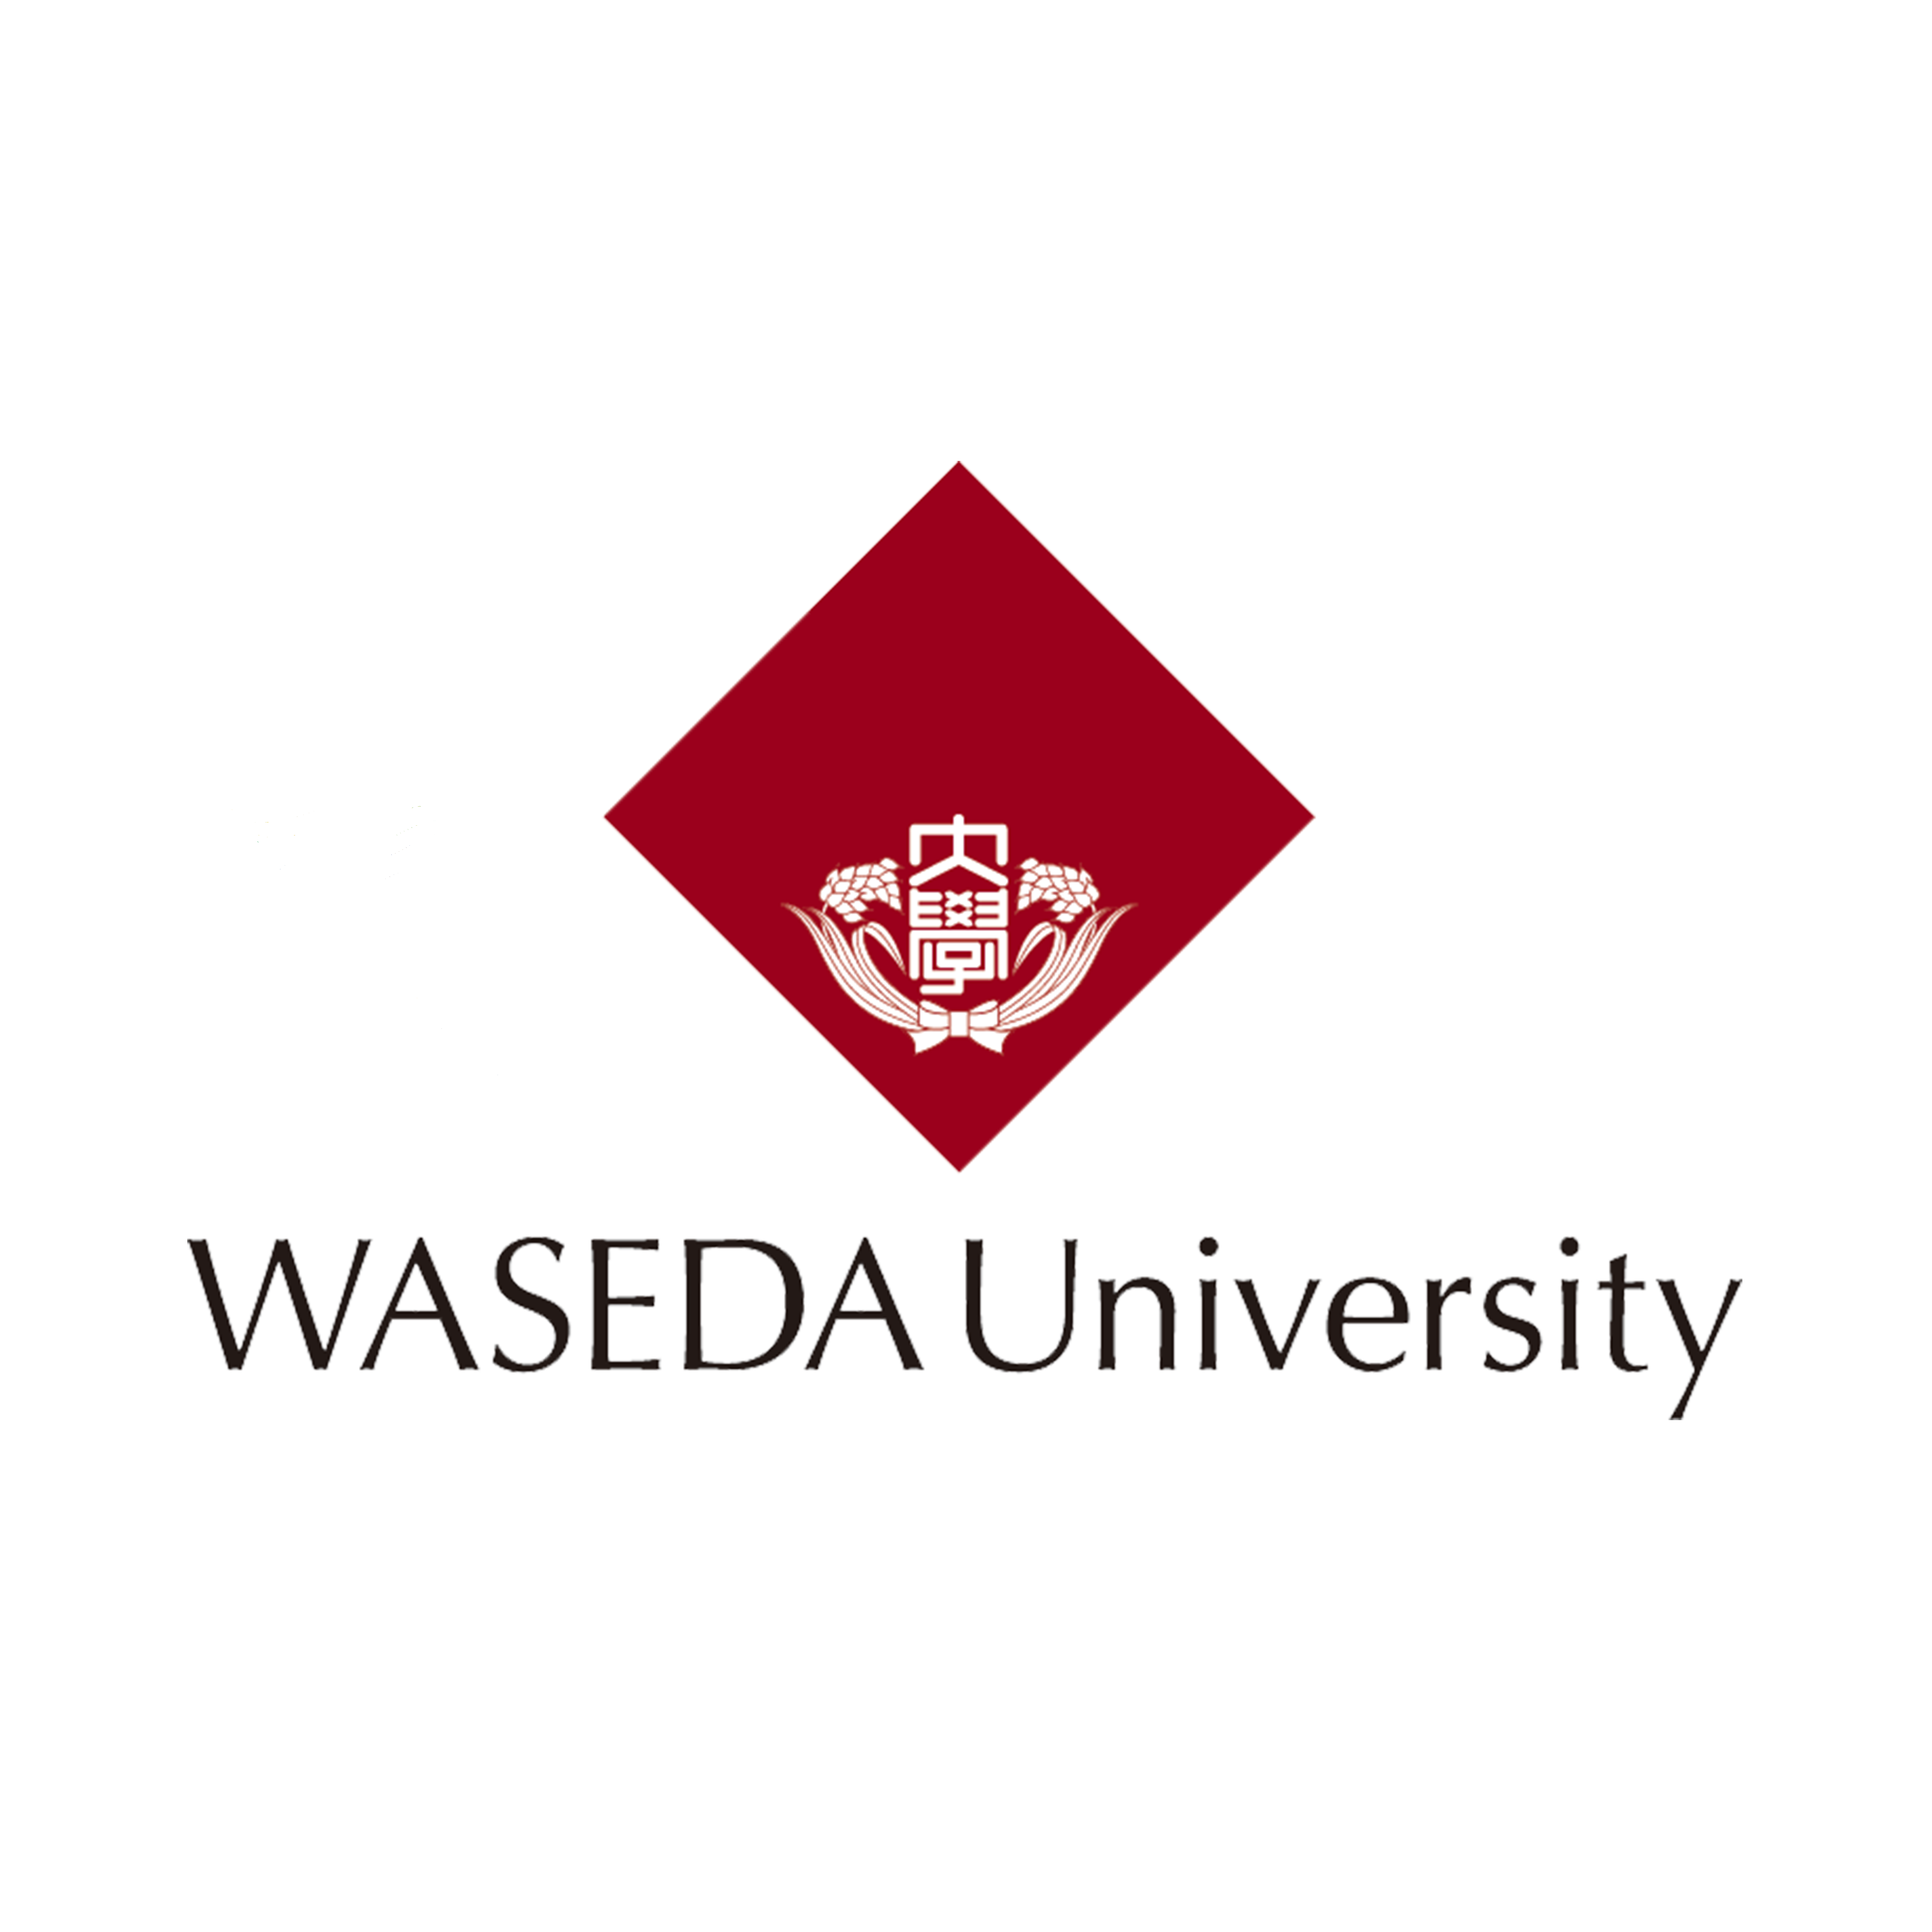 Waseda University text under red logo